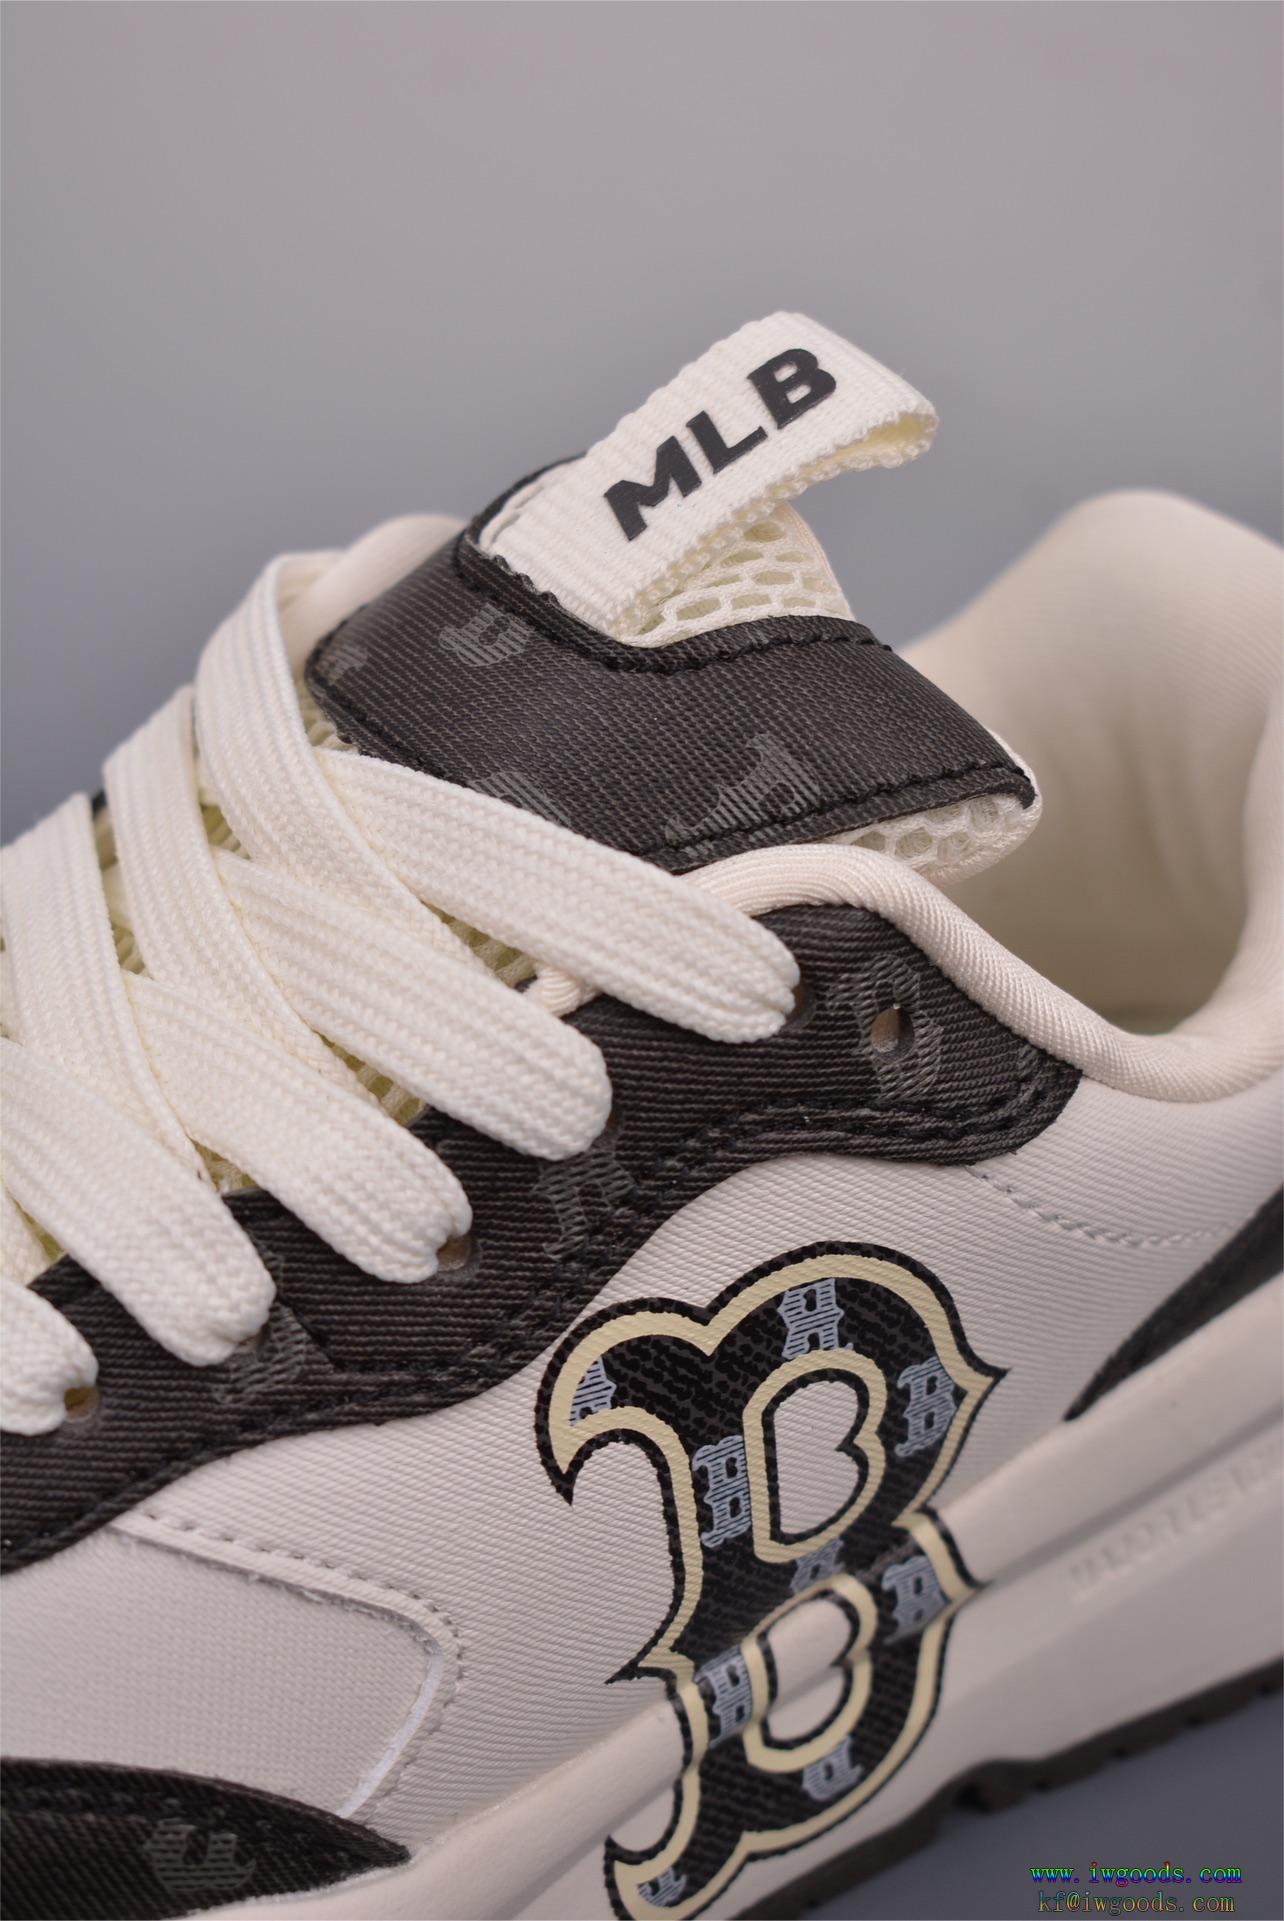 MLB Korea エムエルビーコリア靴偽 ブランド 通販,靴ブランド コピー 販売